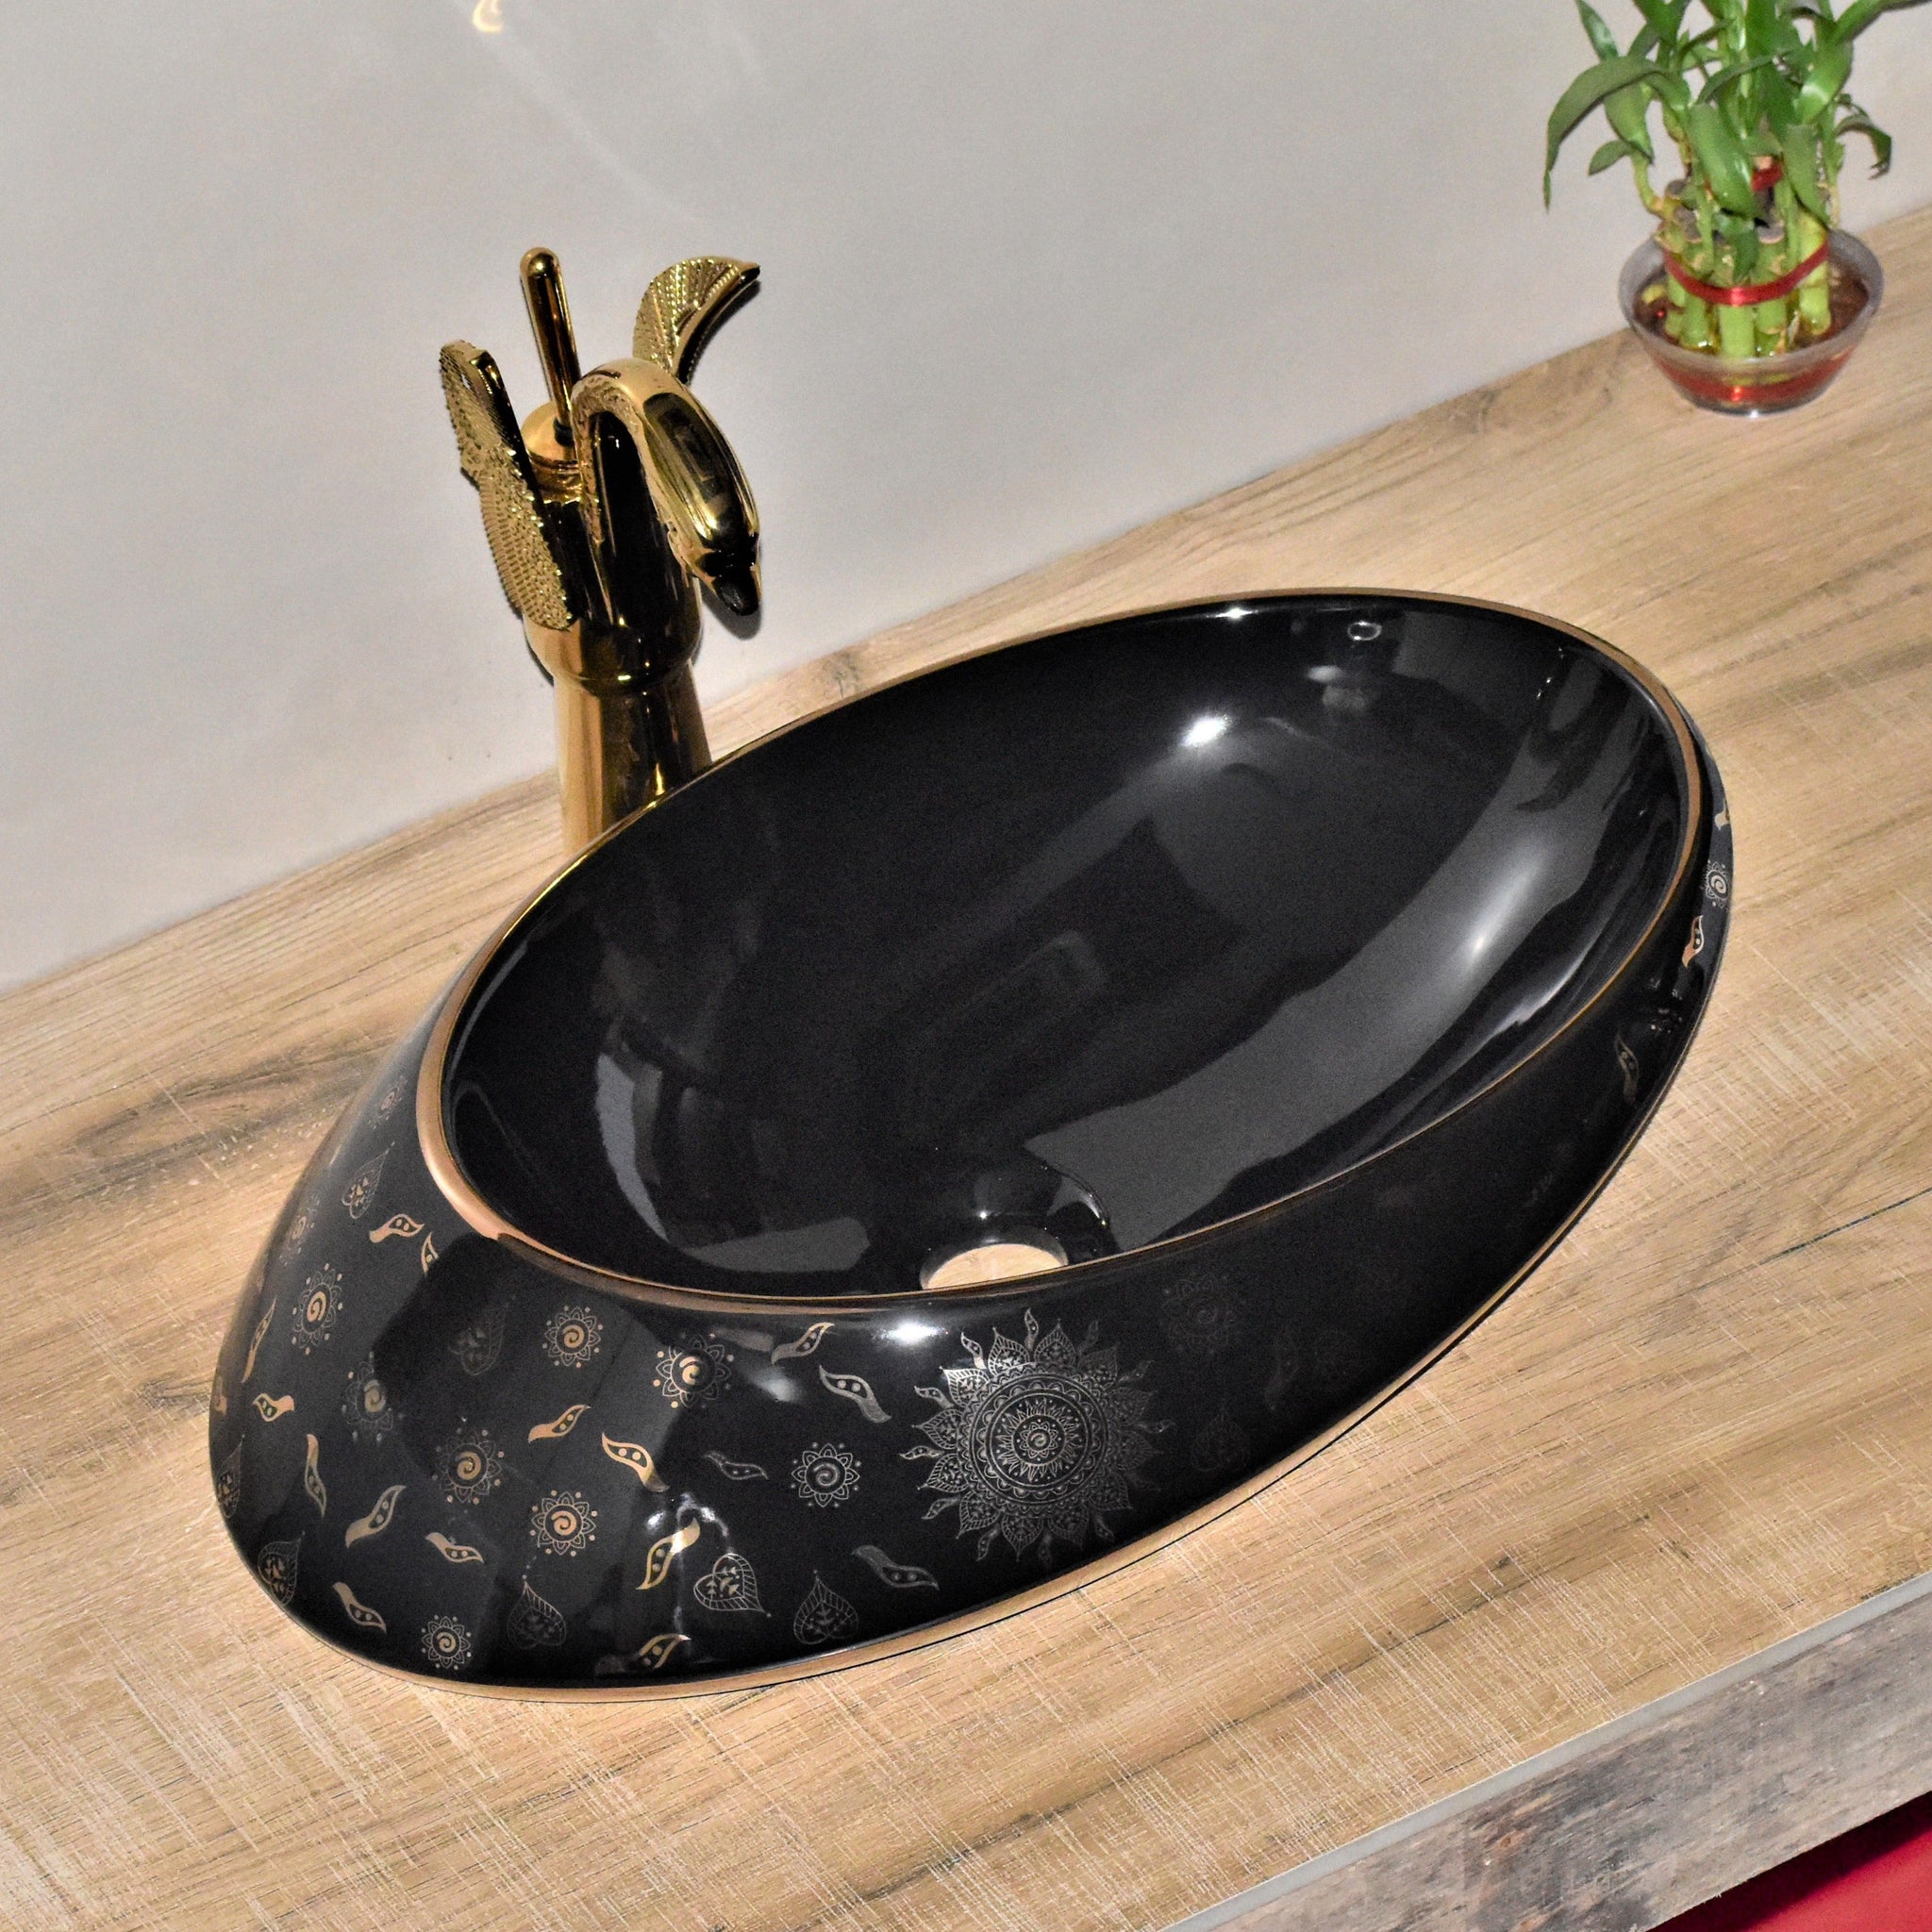 inart ceramic wash basin in golden black color 20x16 inch